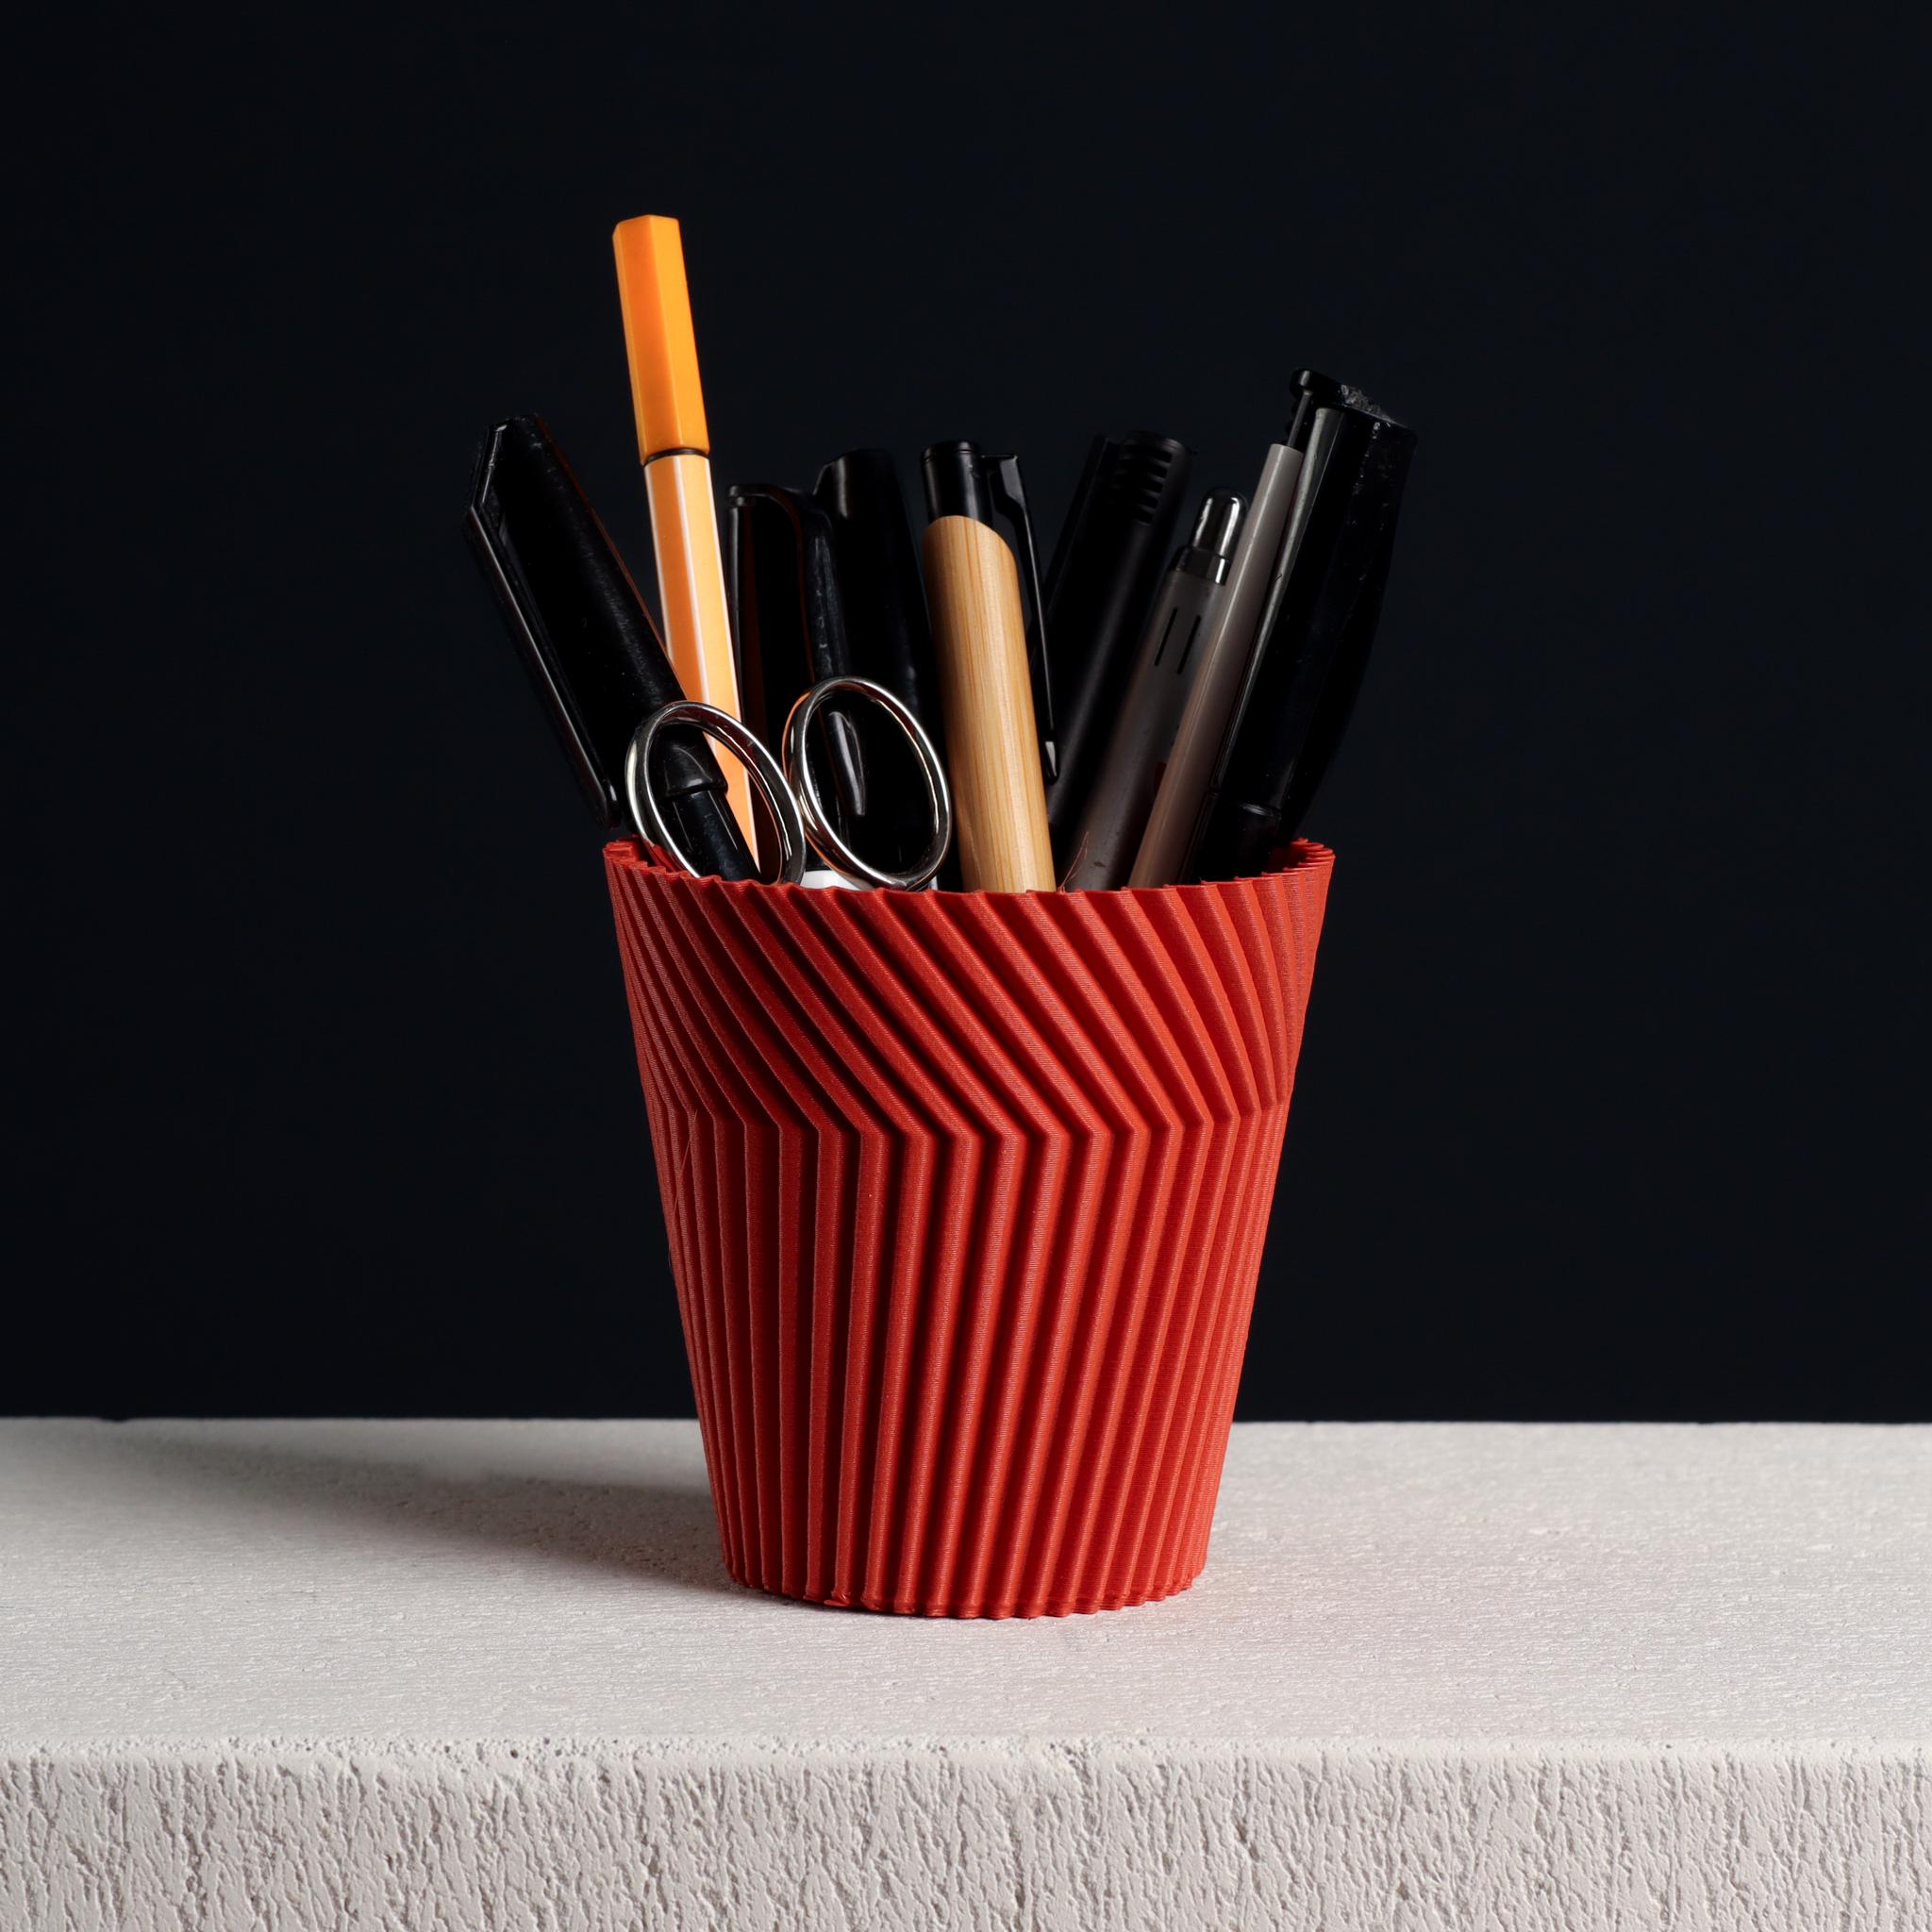  Angled Pencil Cup, Desk Organizer (Vase Mode)  3d model